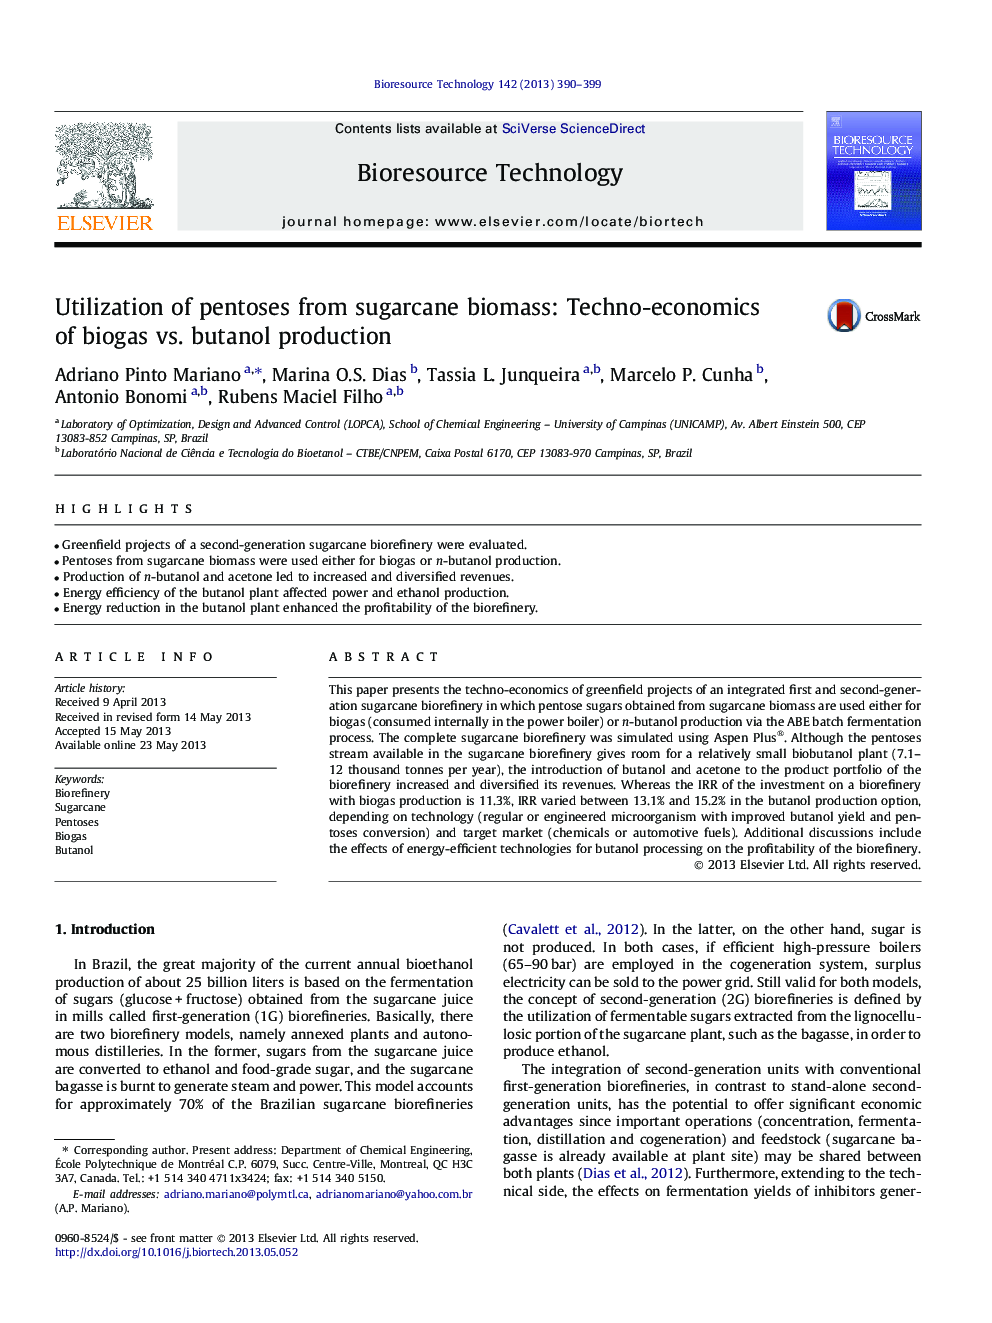 Utilization of pentoses from sugarcane biomass: Techno-economics of biogas vs. butanol production